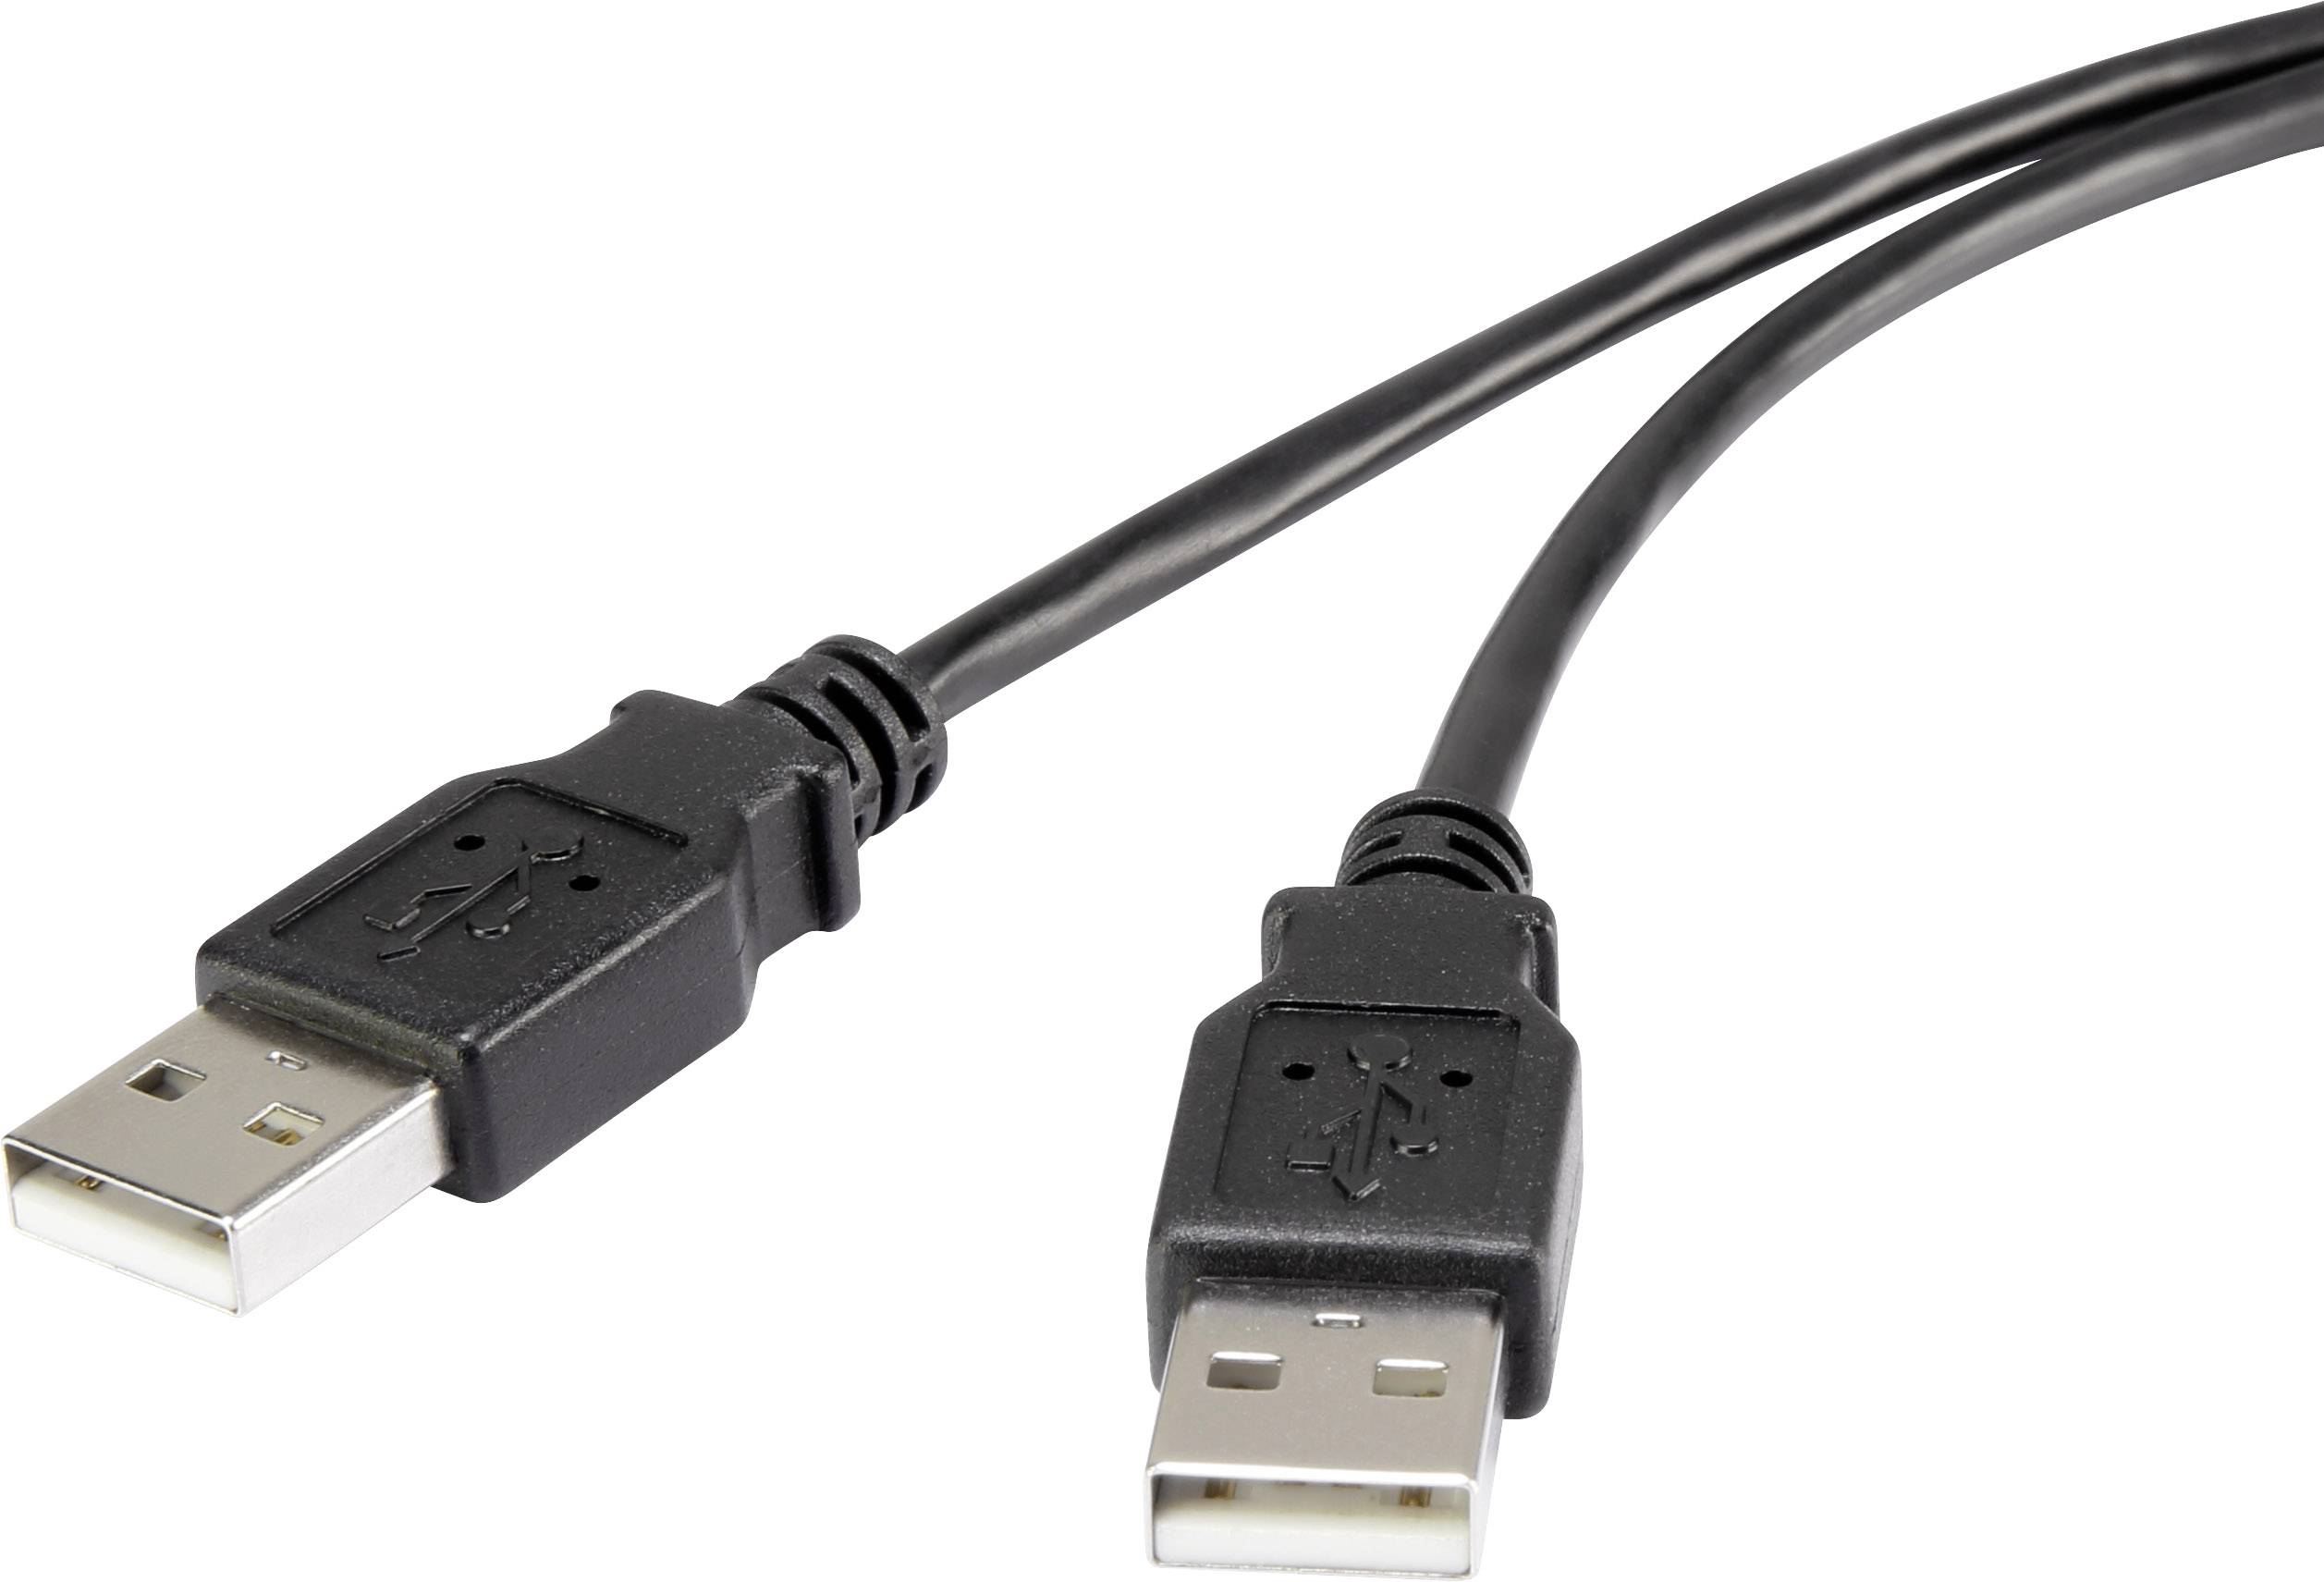 CONRAD Renkforce USB 2.0 Kabel [1x USB 2.0 Stecker A - 1x USB 2.0 Stecker A] 1 m Schwarz vergoldete